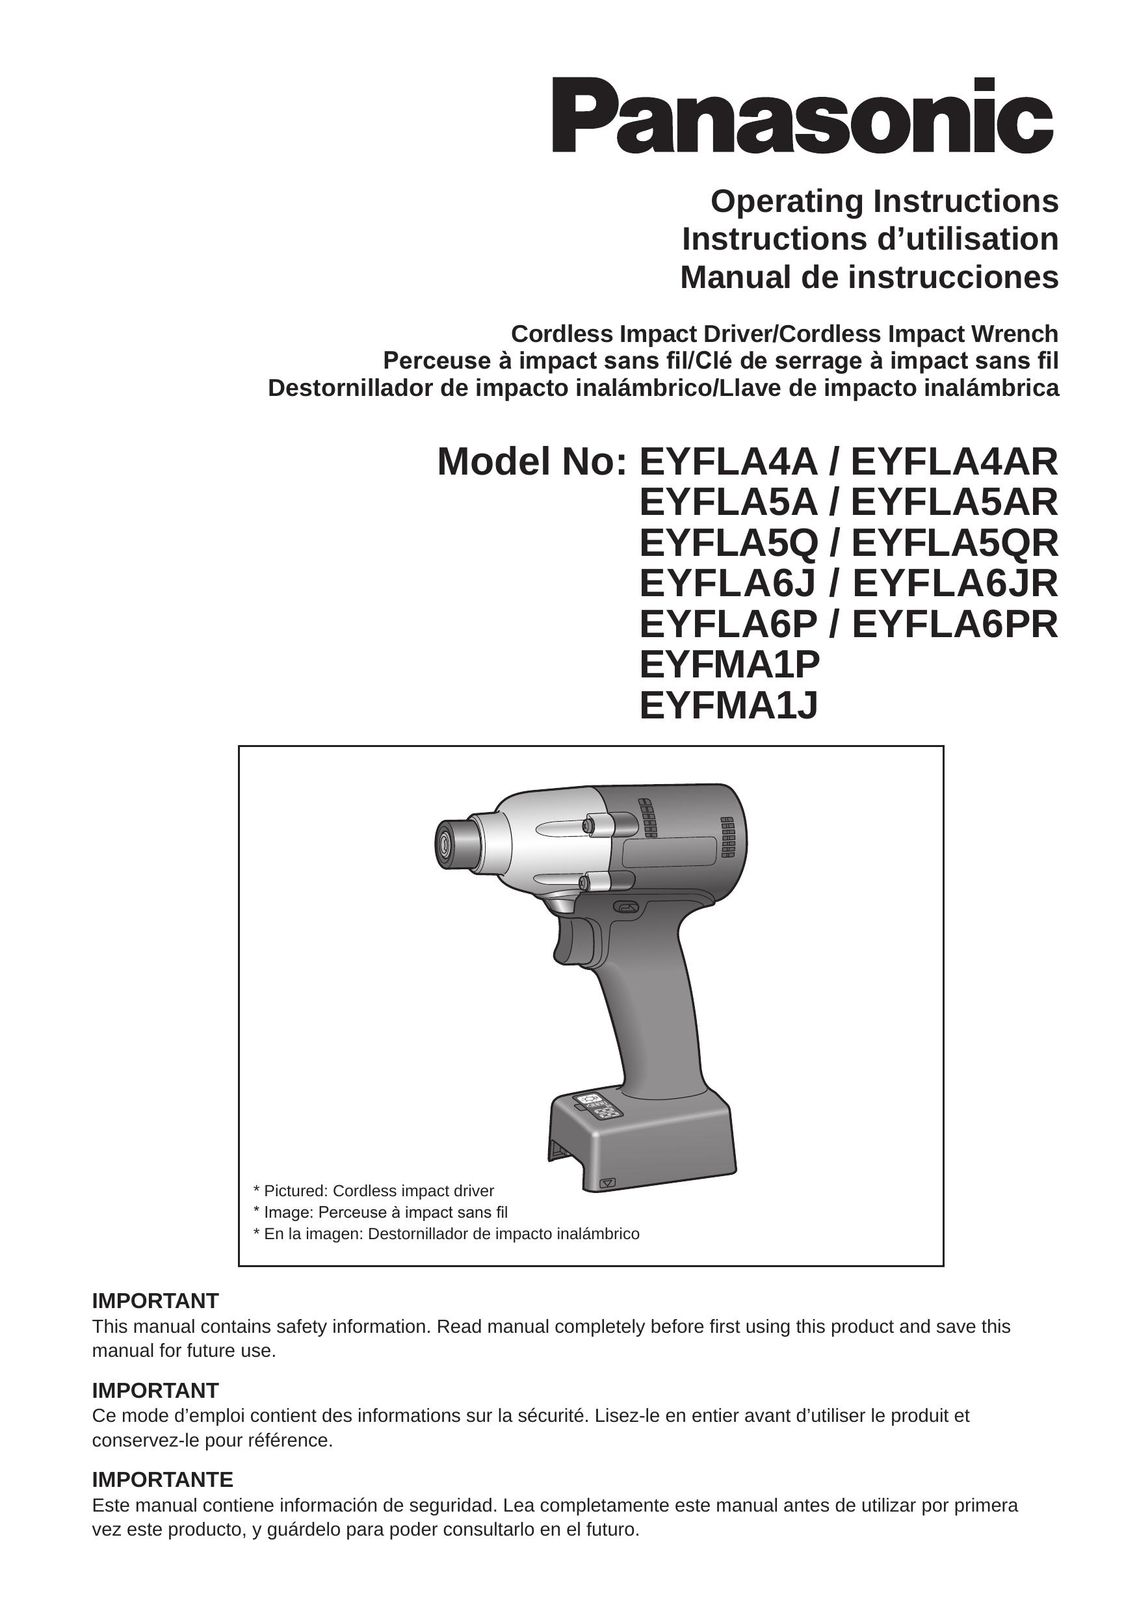 Panasonic EYFLA4A Impact Driver User Manual